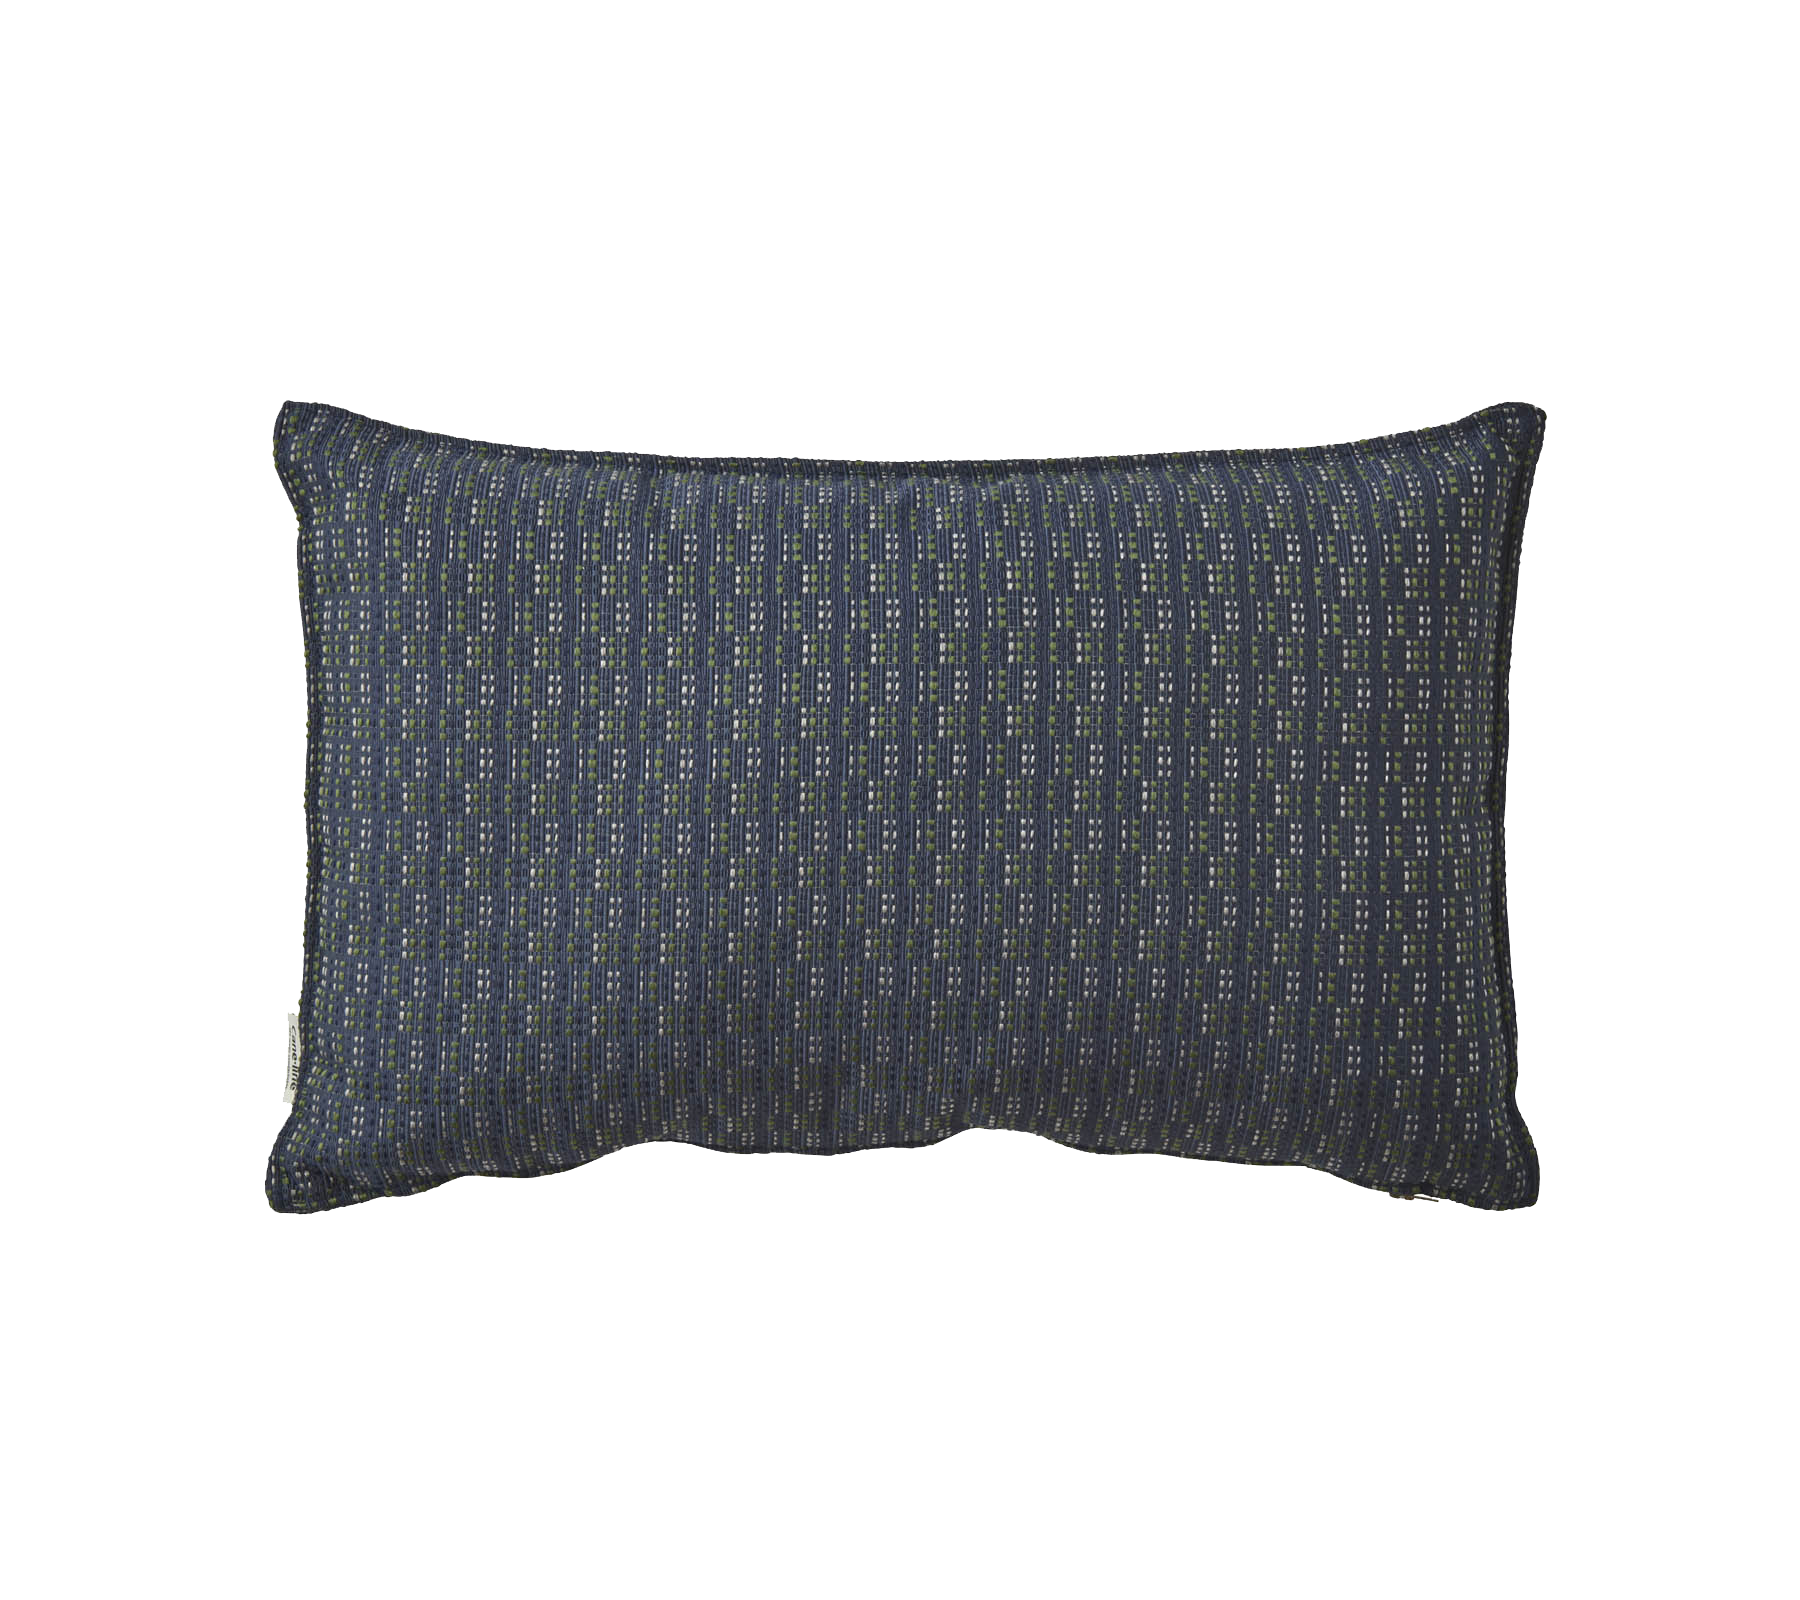 Stripe scatter cushion 32x52x12 cm